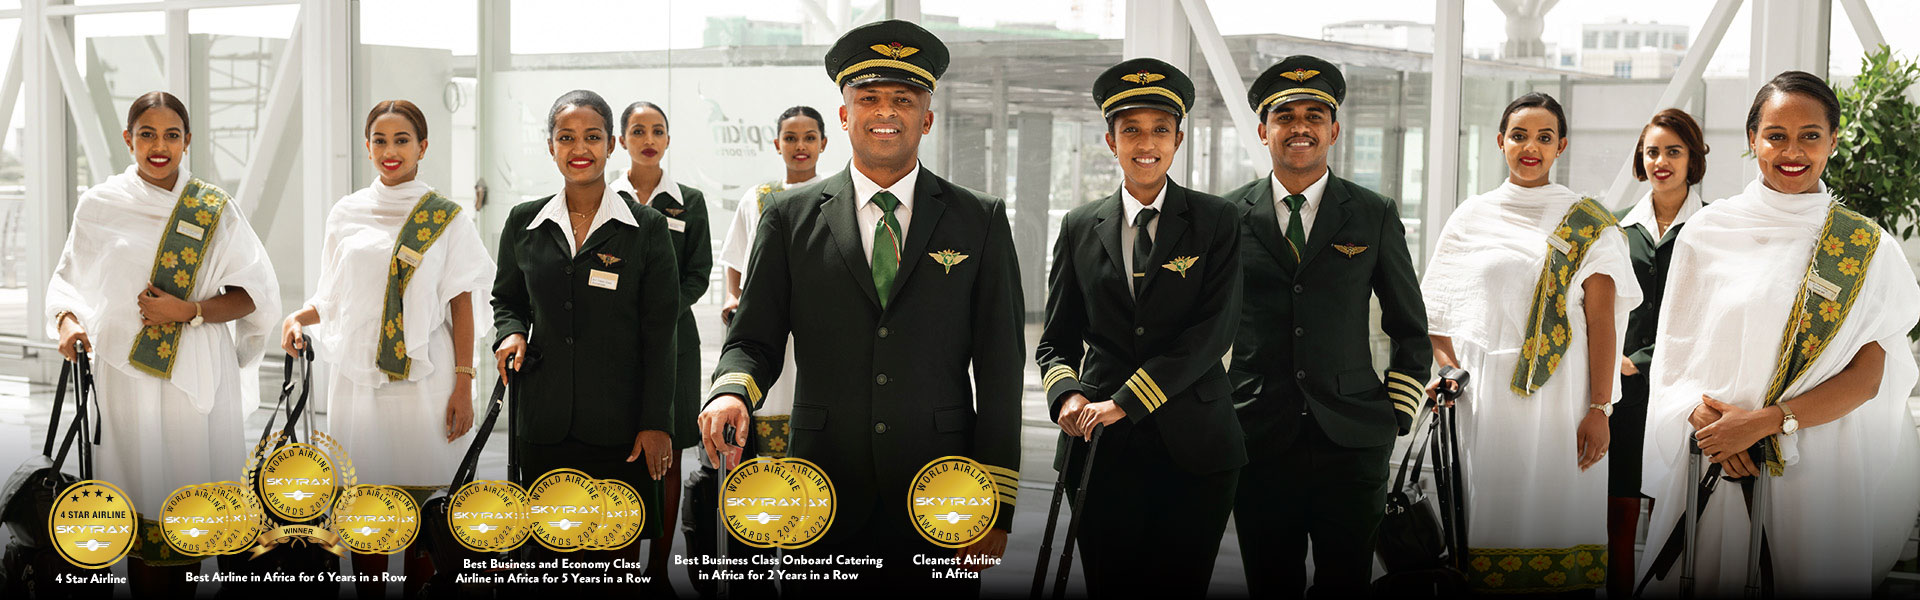 Ethiopian-Airlines best Airline in Africa